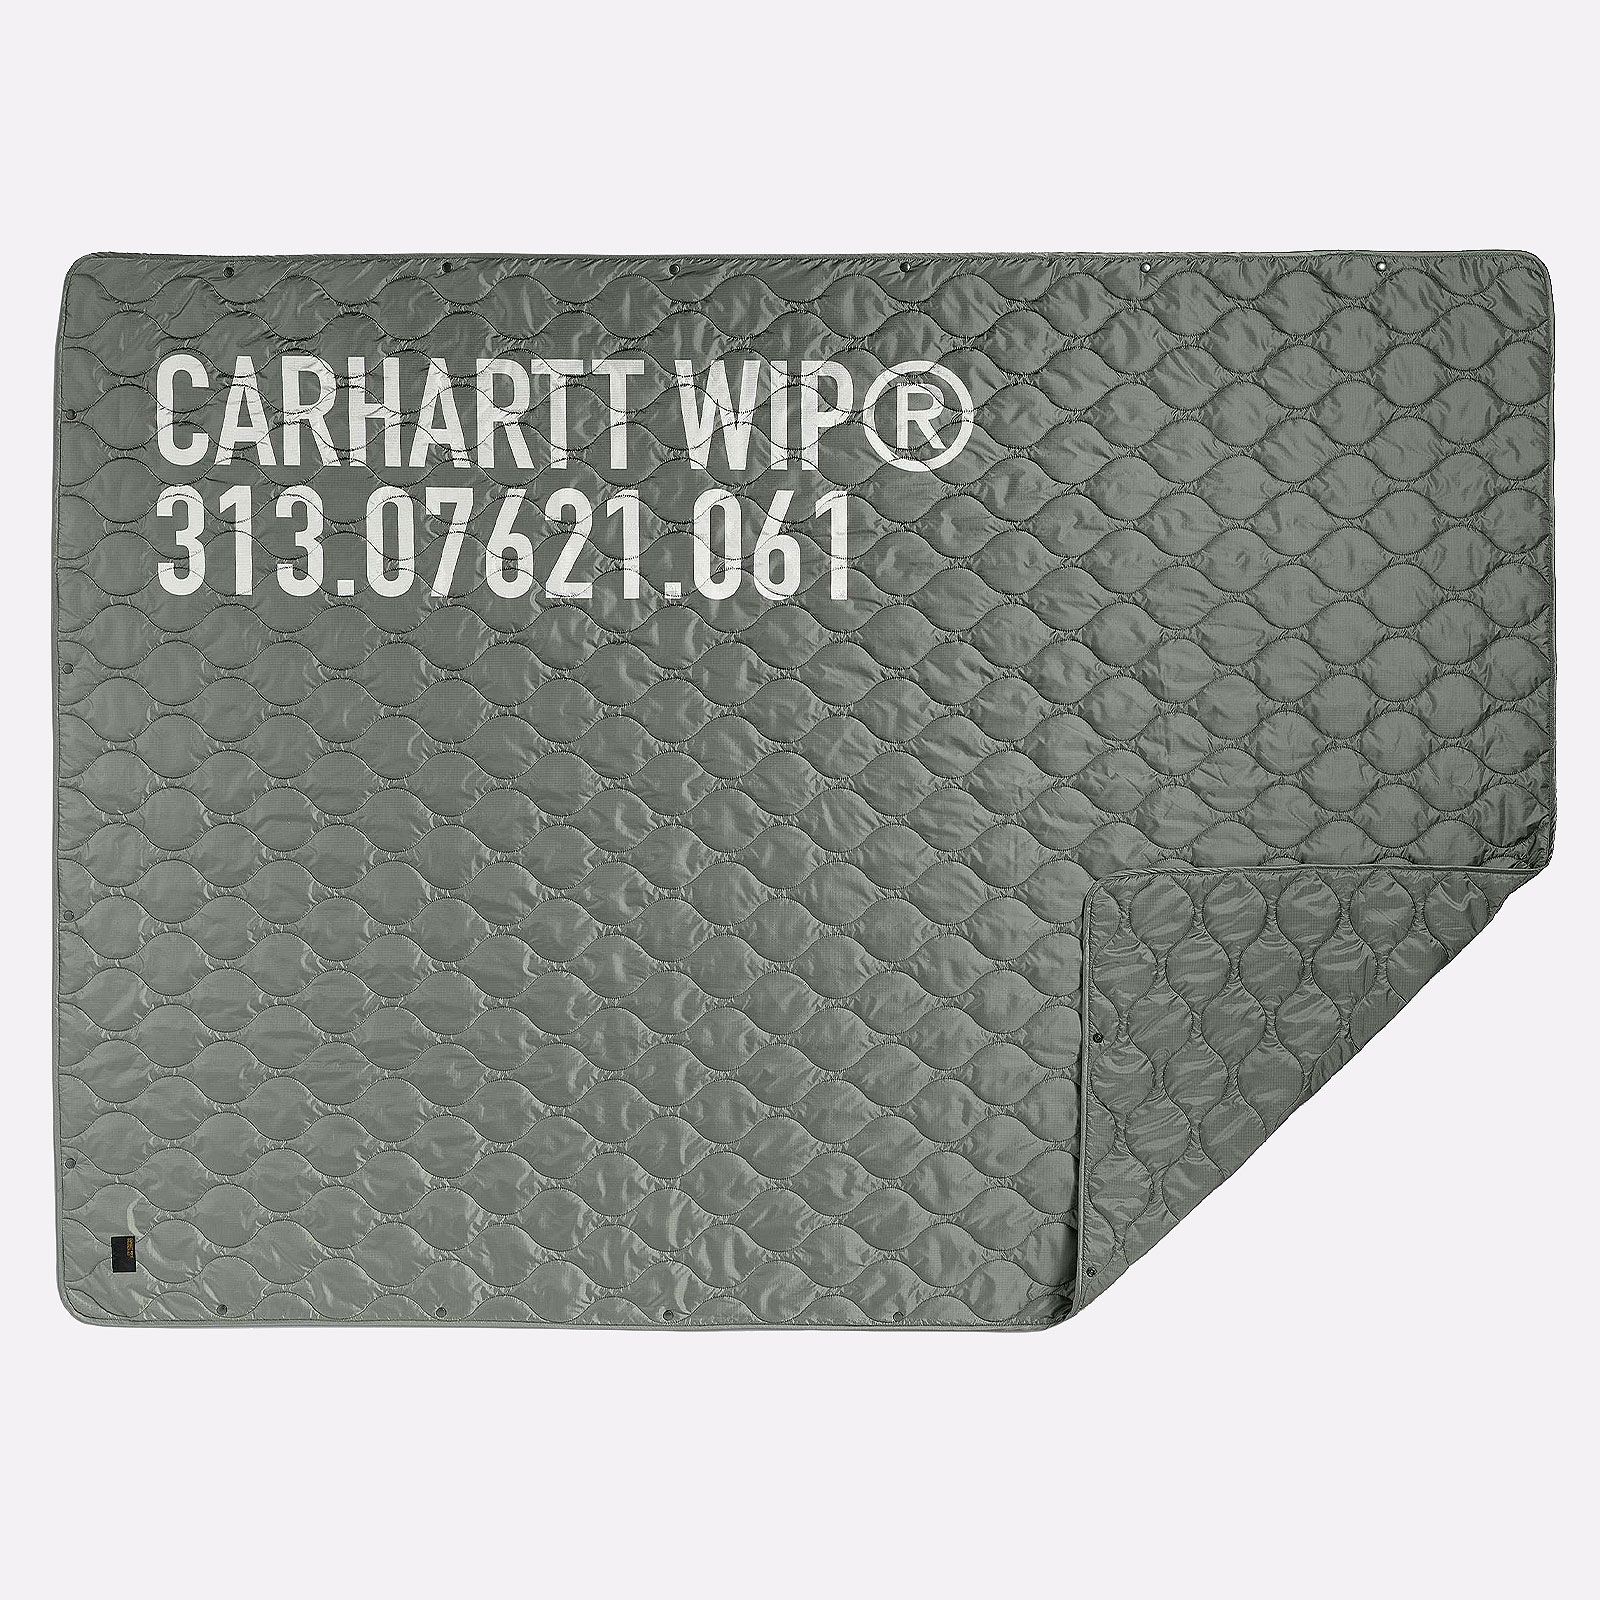 плед Carhartt WIP Tour Quiled Blanket  (I032492-green/ref)  - цена, описание, фото 1